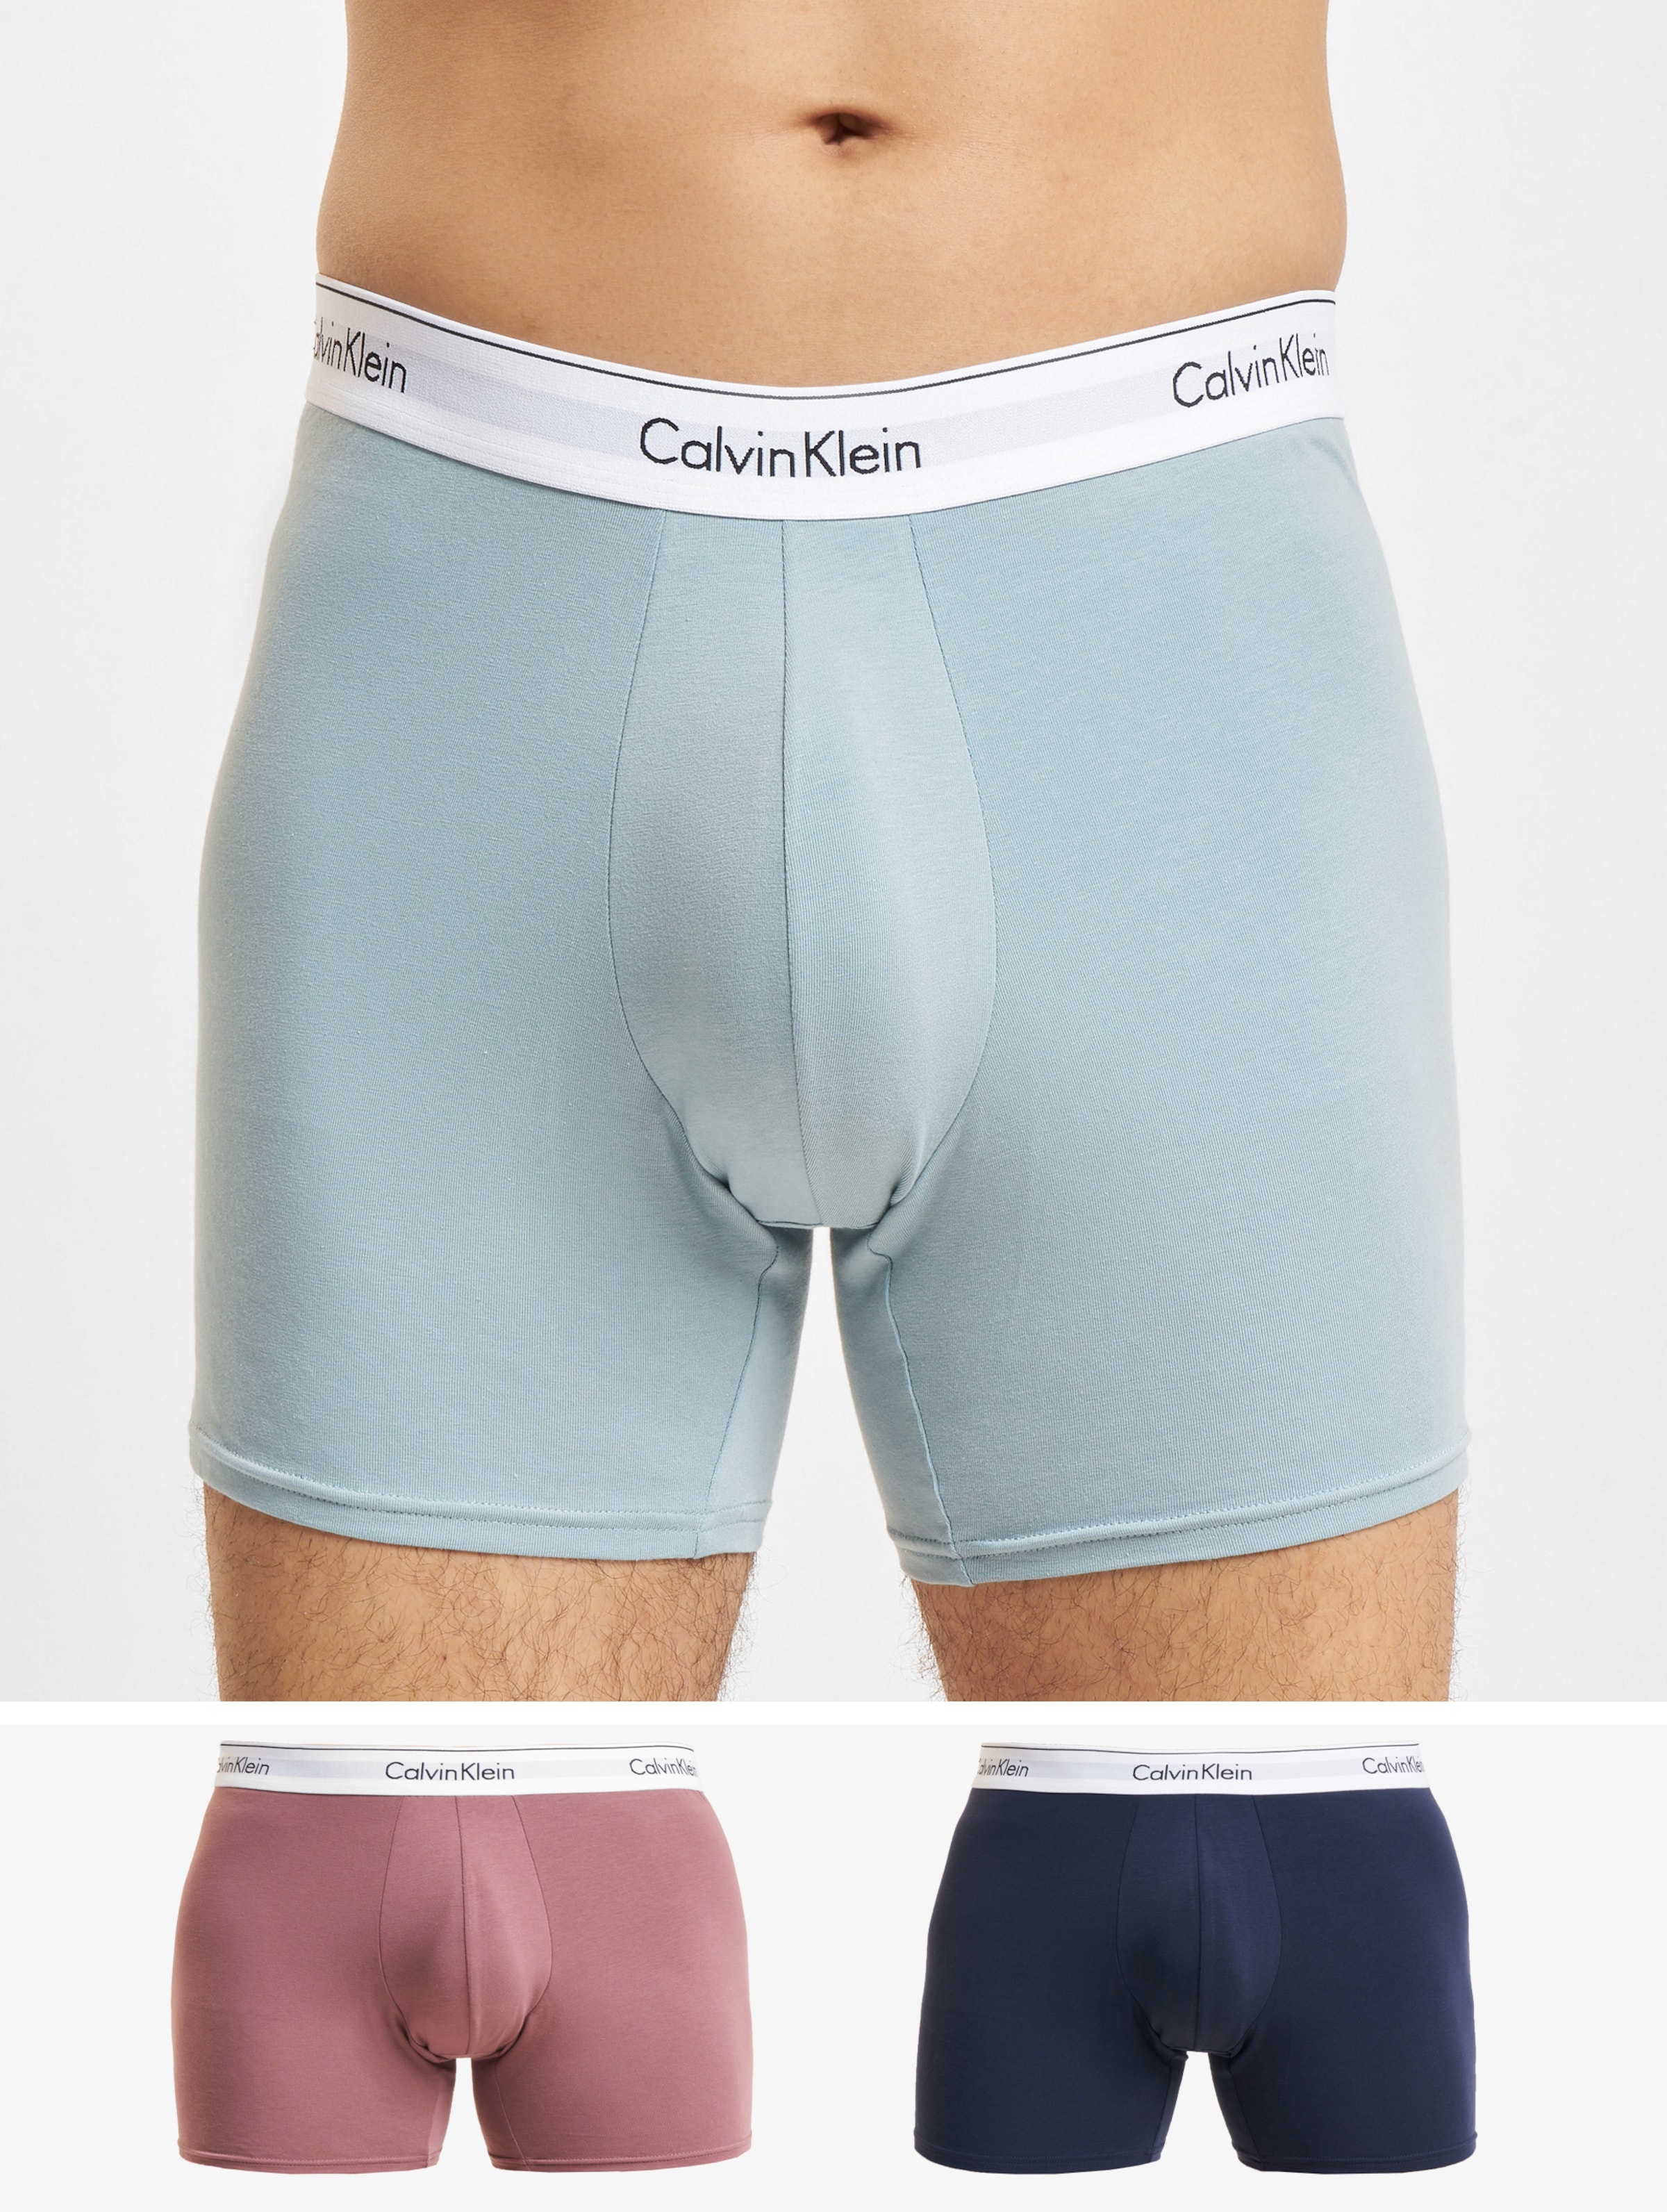 Calvin Klein Brief 3 Pack Boxershorts Männer,Unisex op kleur kleurrijk, Maat M